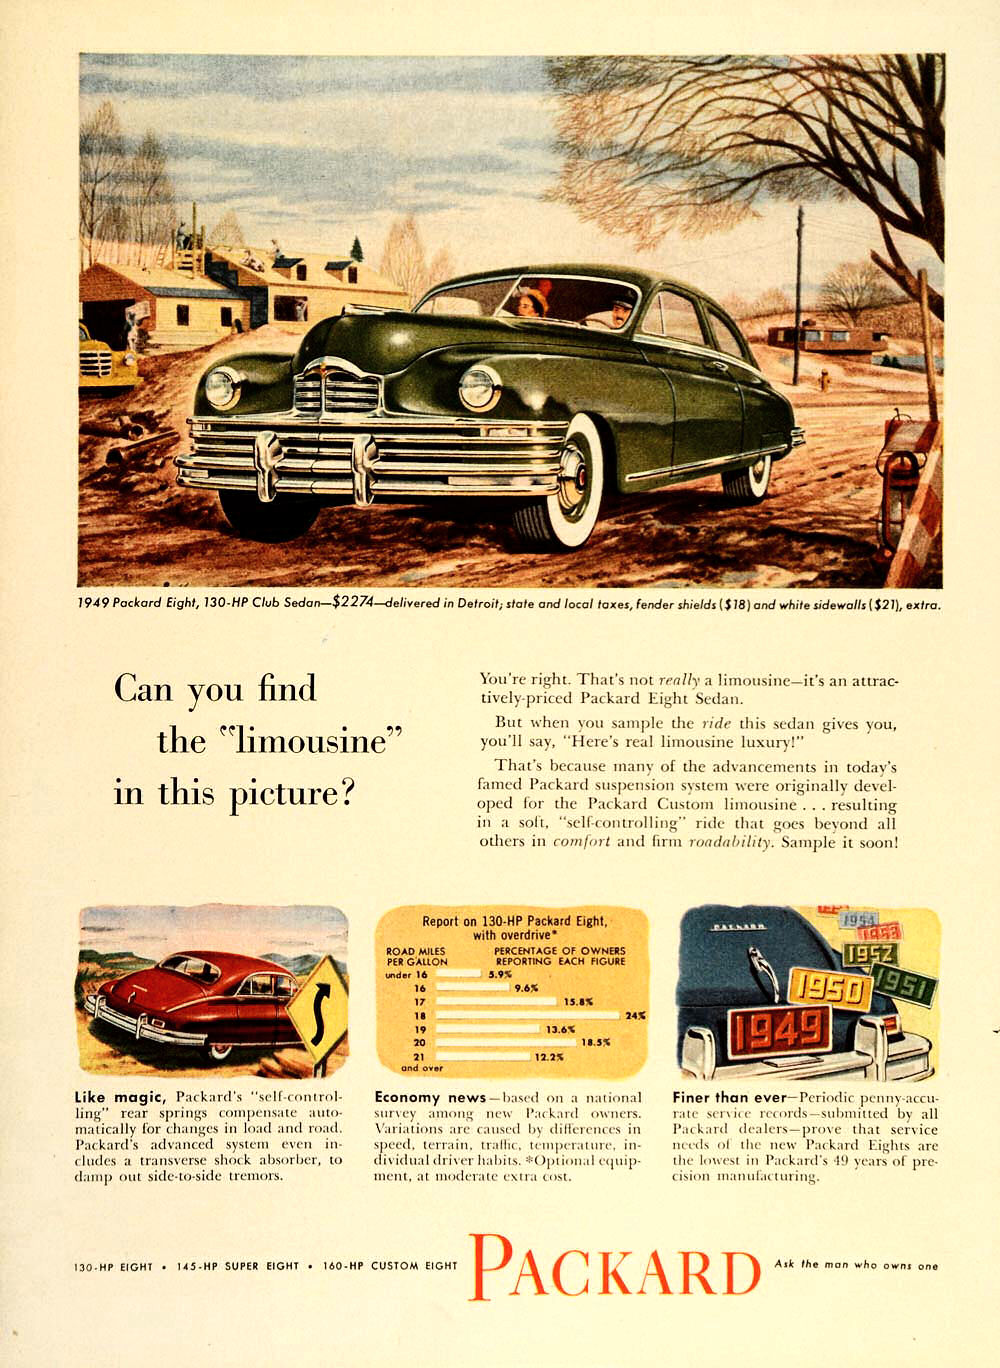 1949 Packard Ad-01